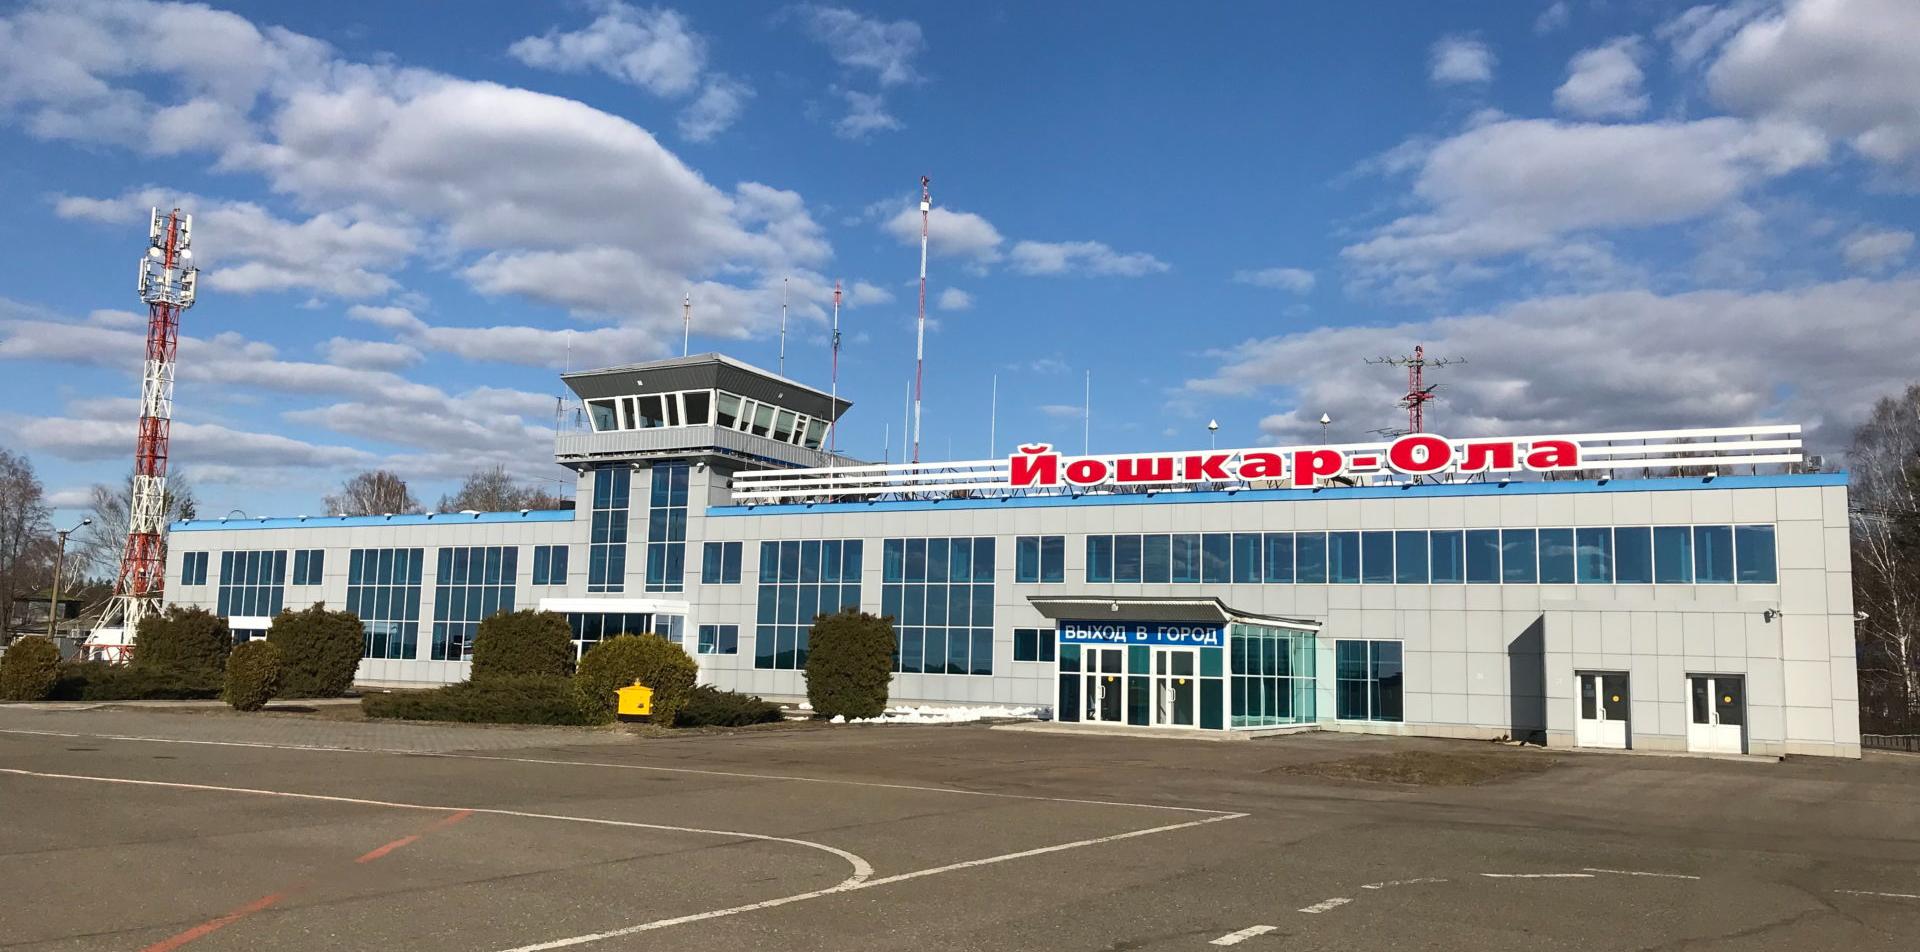 Аэропорт Йошкар-Олы оборудуют новым пассажирским терминалом